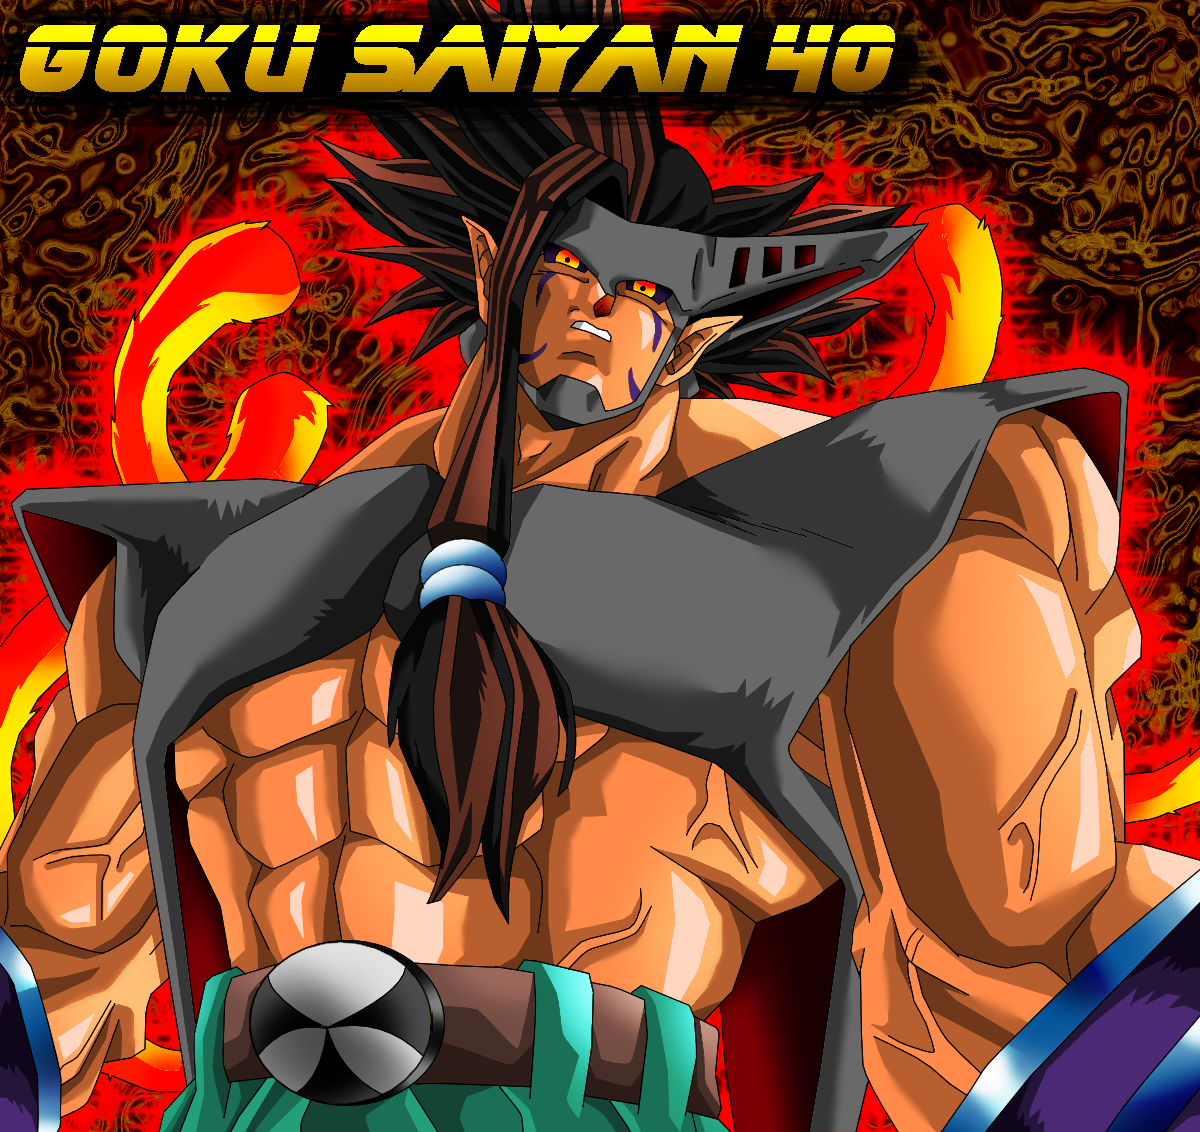 Goku Super Saiyan 5 Toyble Dragon Ball AF by valenbuscaa on DeviantArt